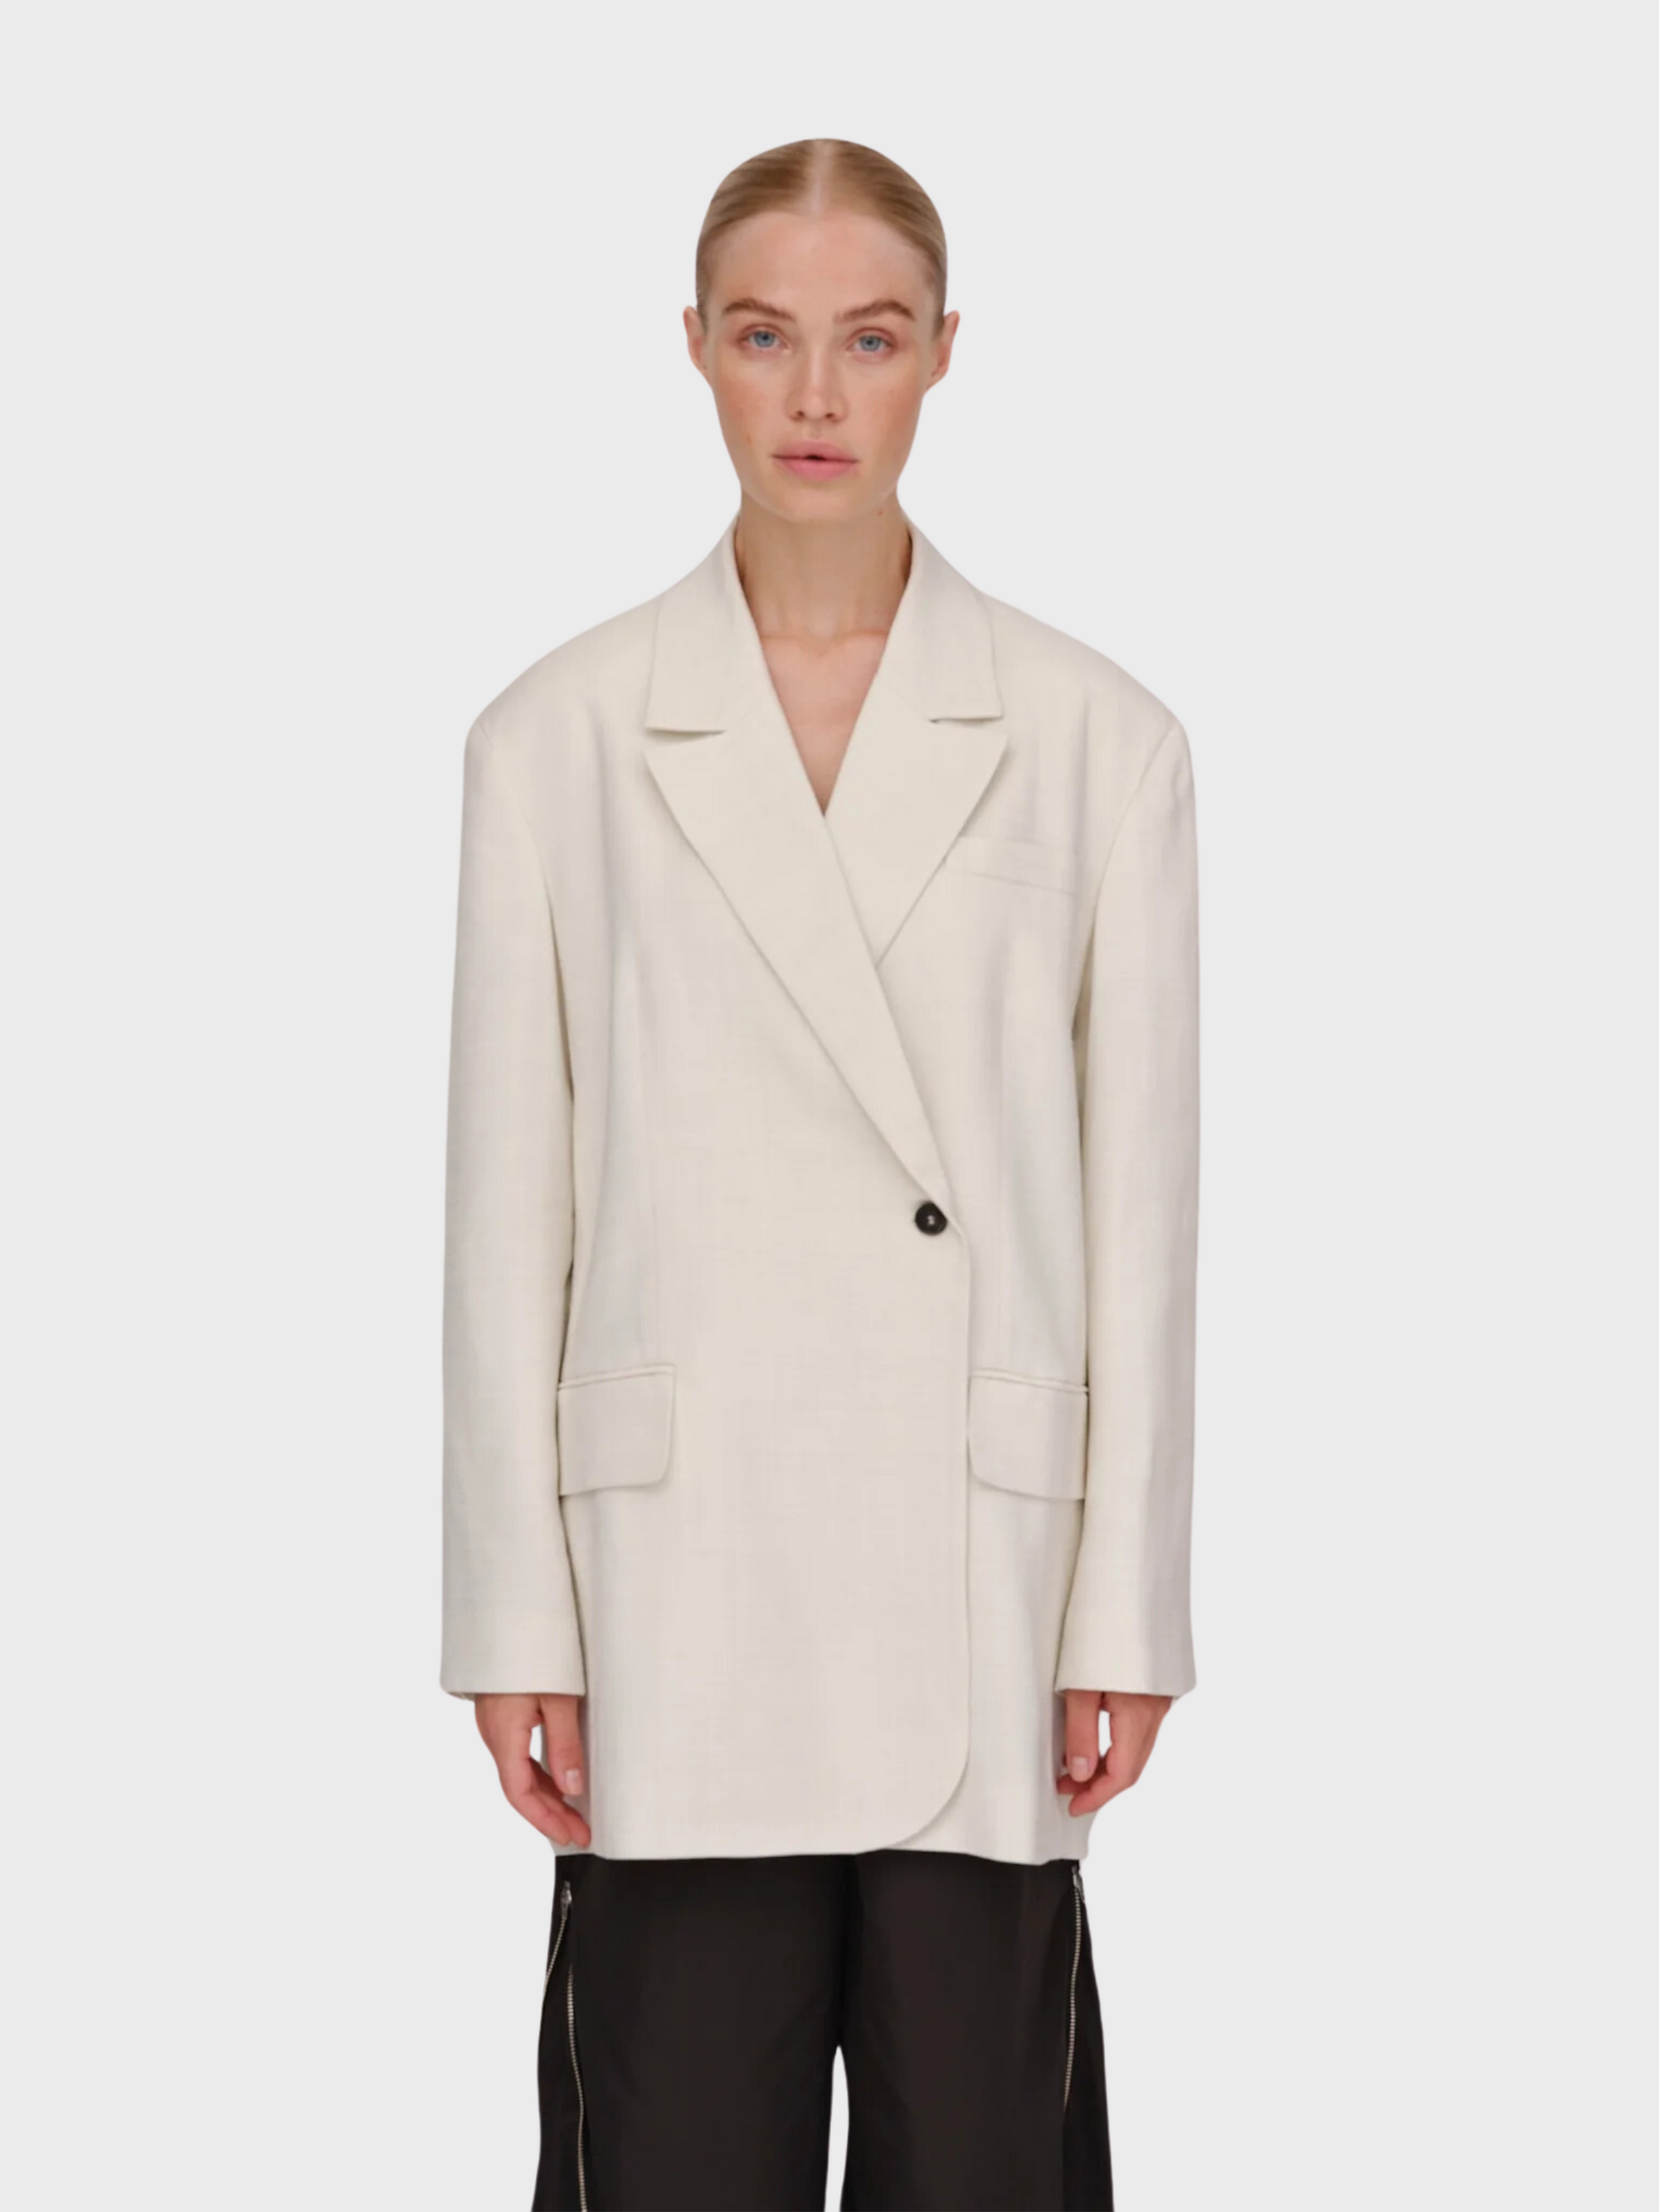 Herskind Verner Blazer Medium White-Jackets-West of Woodward Boutique-Vancouver-Canada